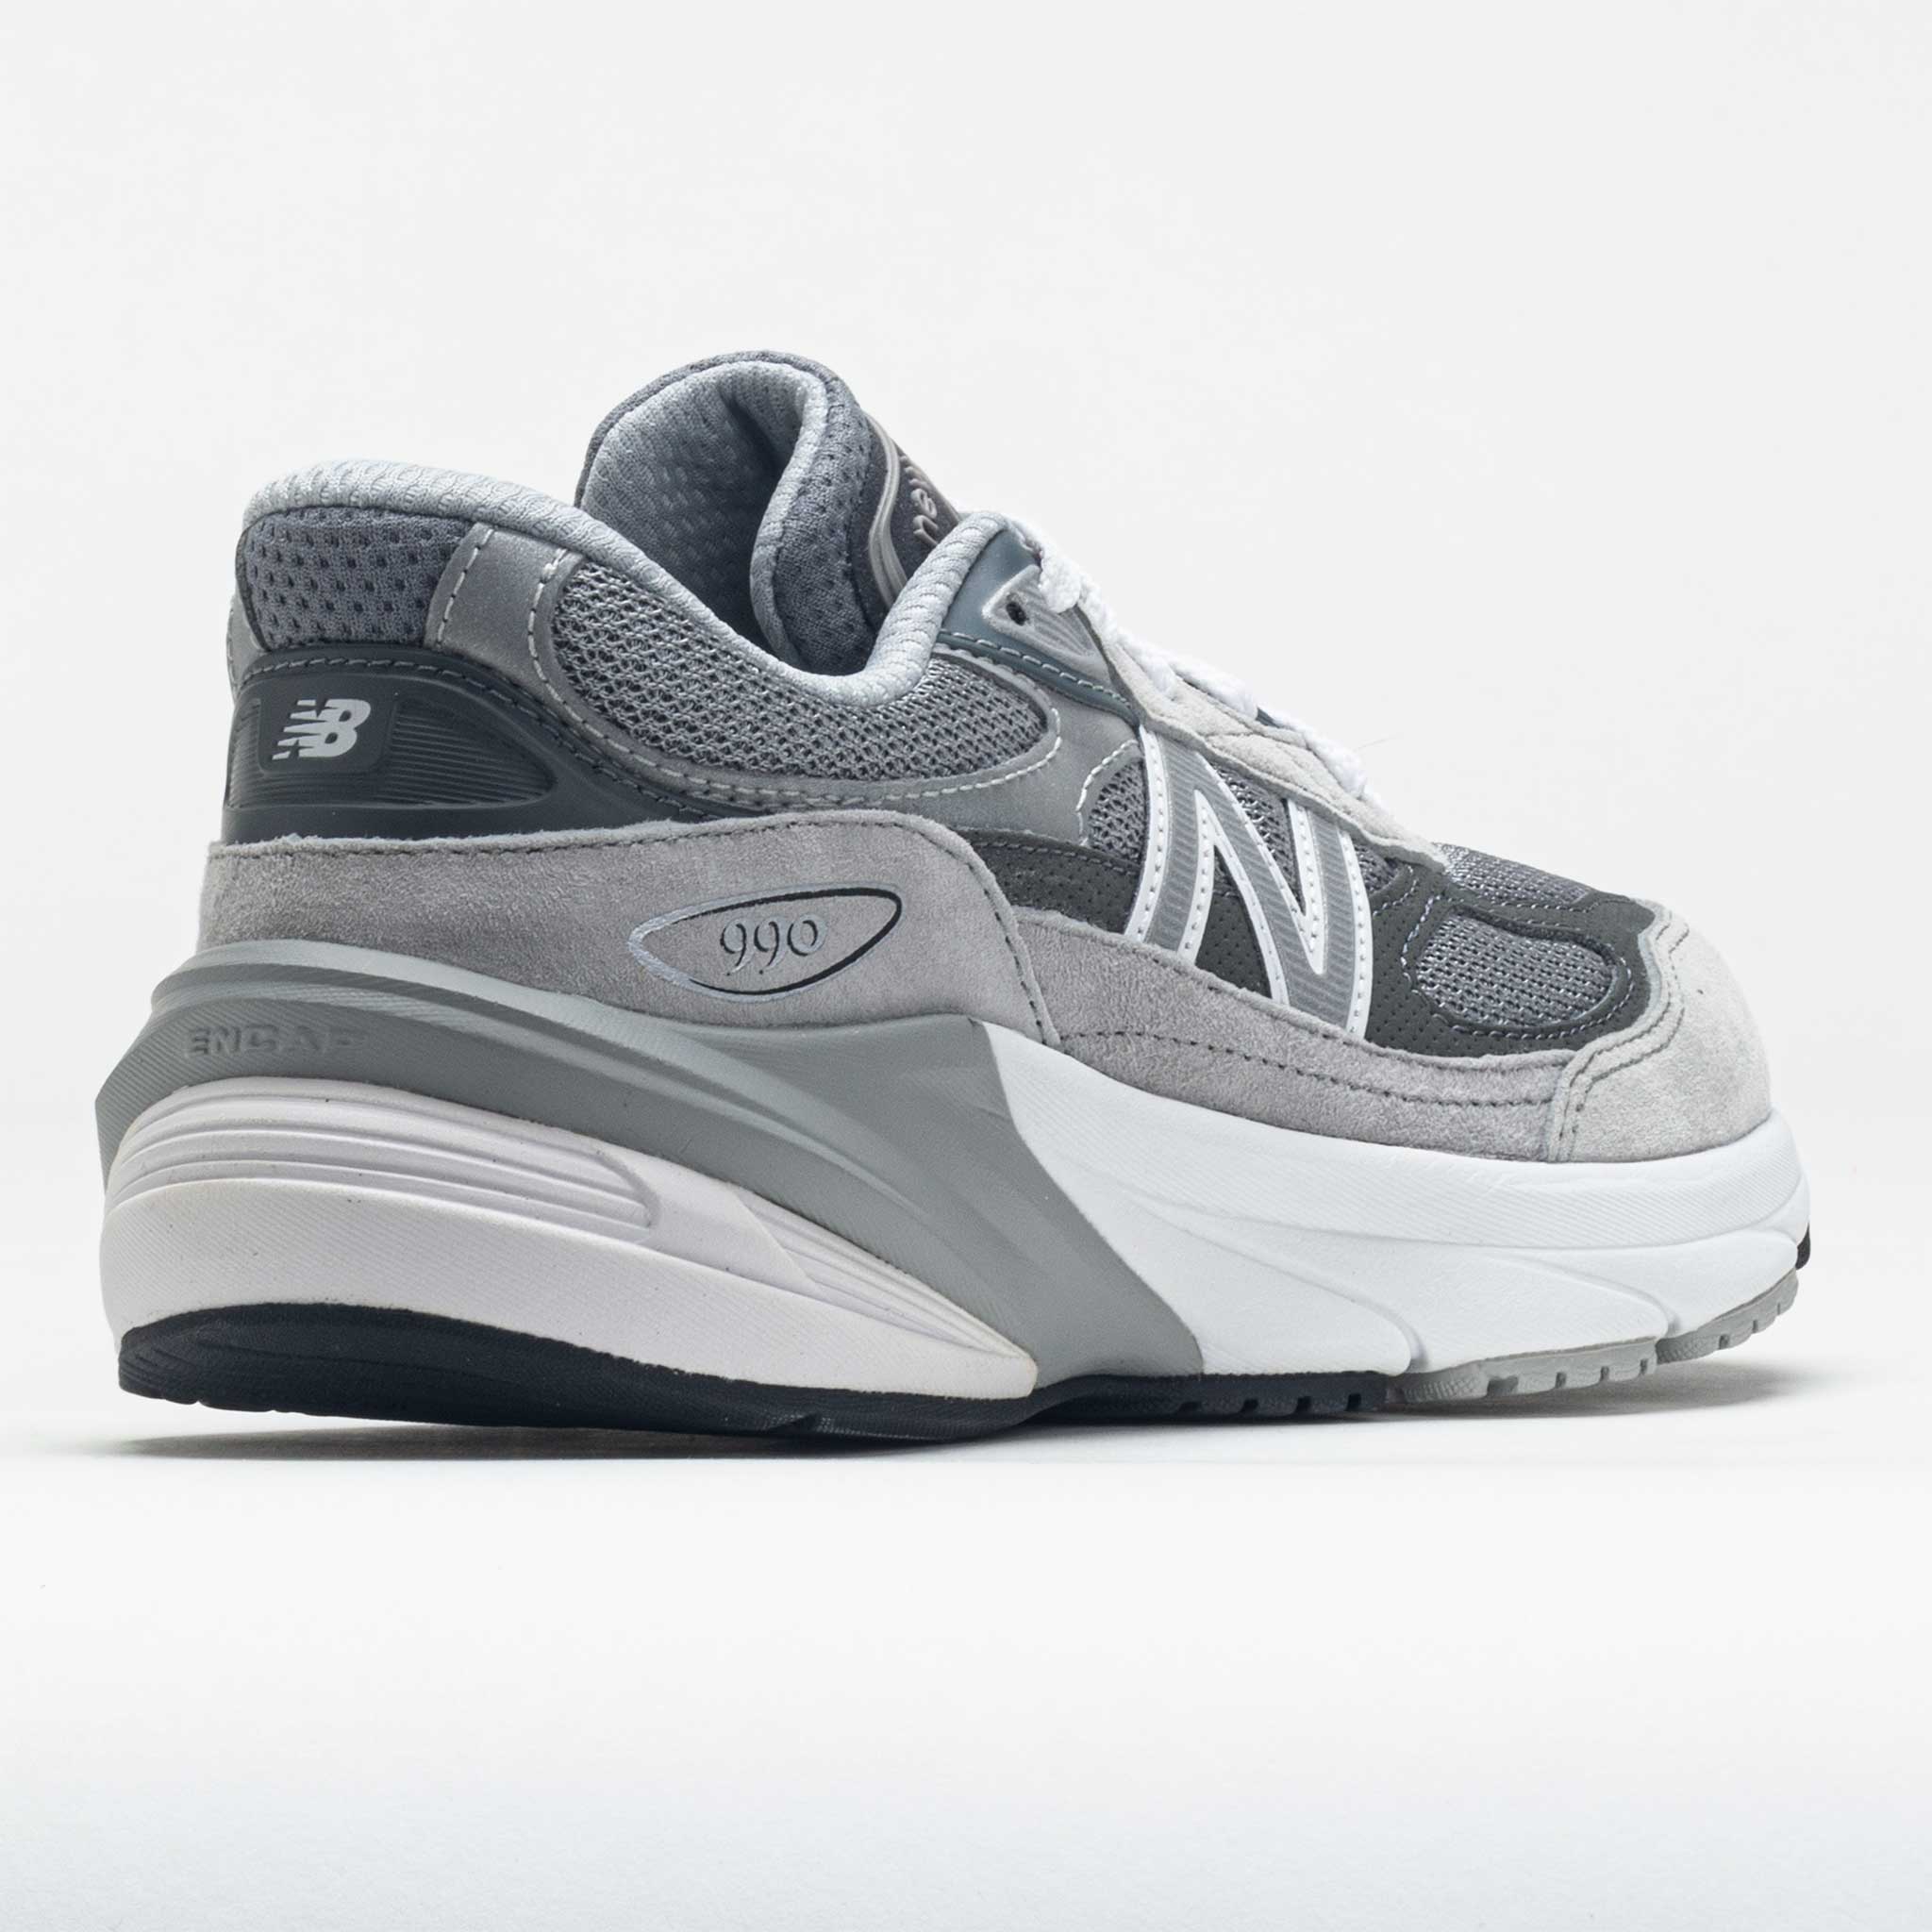 New Balance 990v6 Junior Grey/Silver